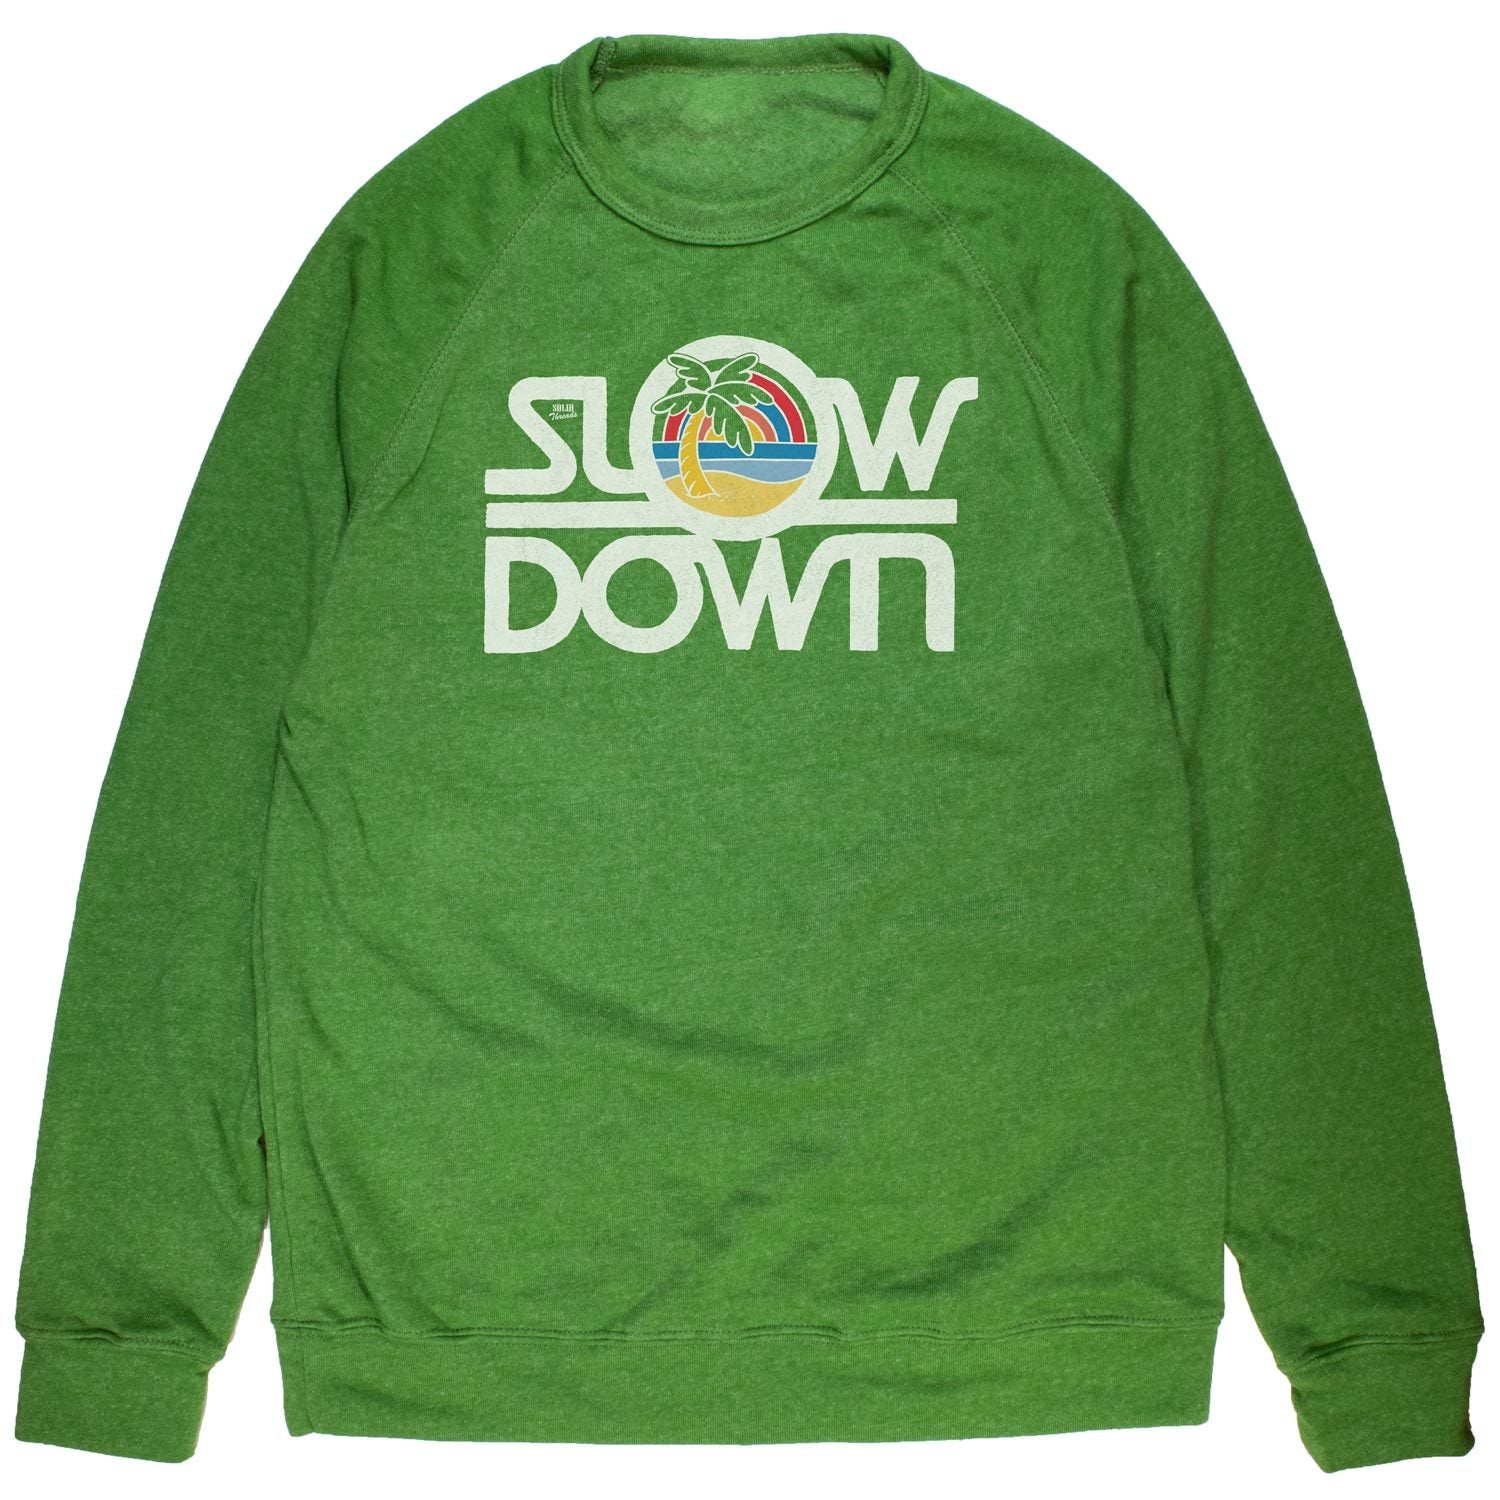 Vintage Graphic Sweatshirts & | Shop Now - Solid Threads